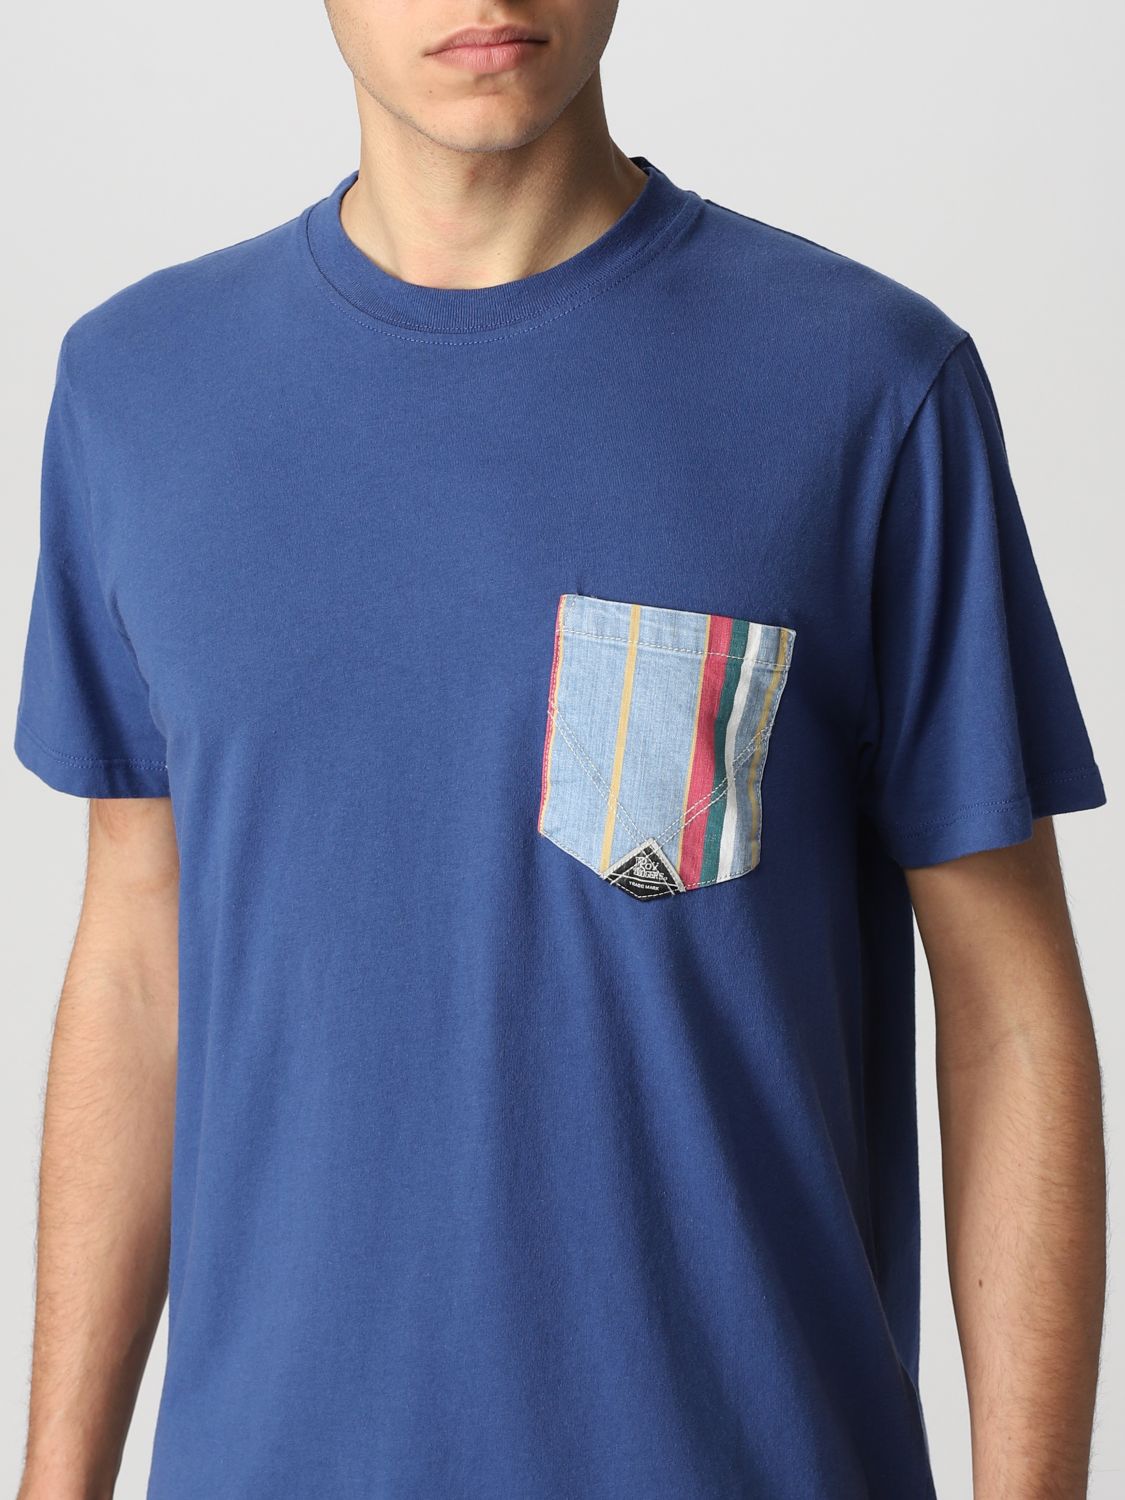 T-Shirt Roy Rogers: T-shirt herren Roy Rogers hellblau 3